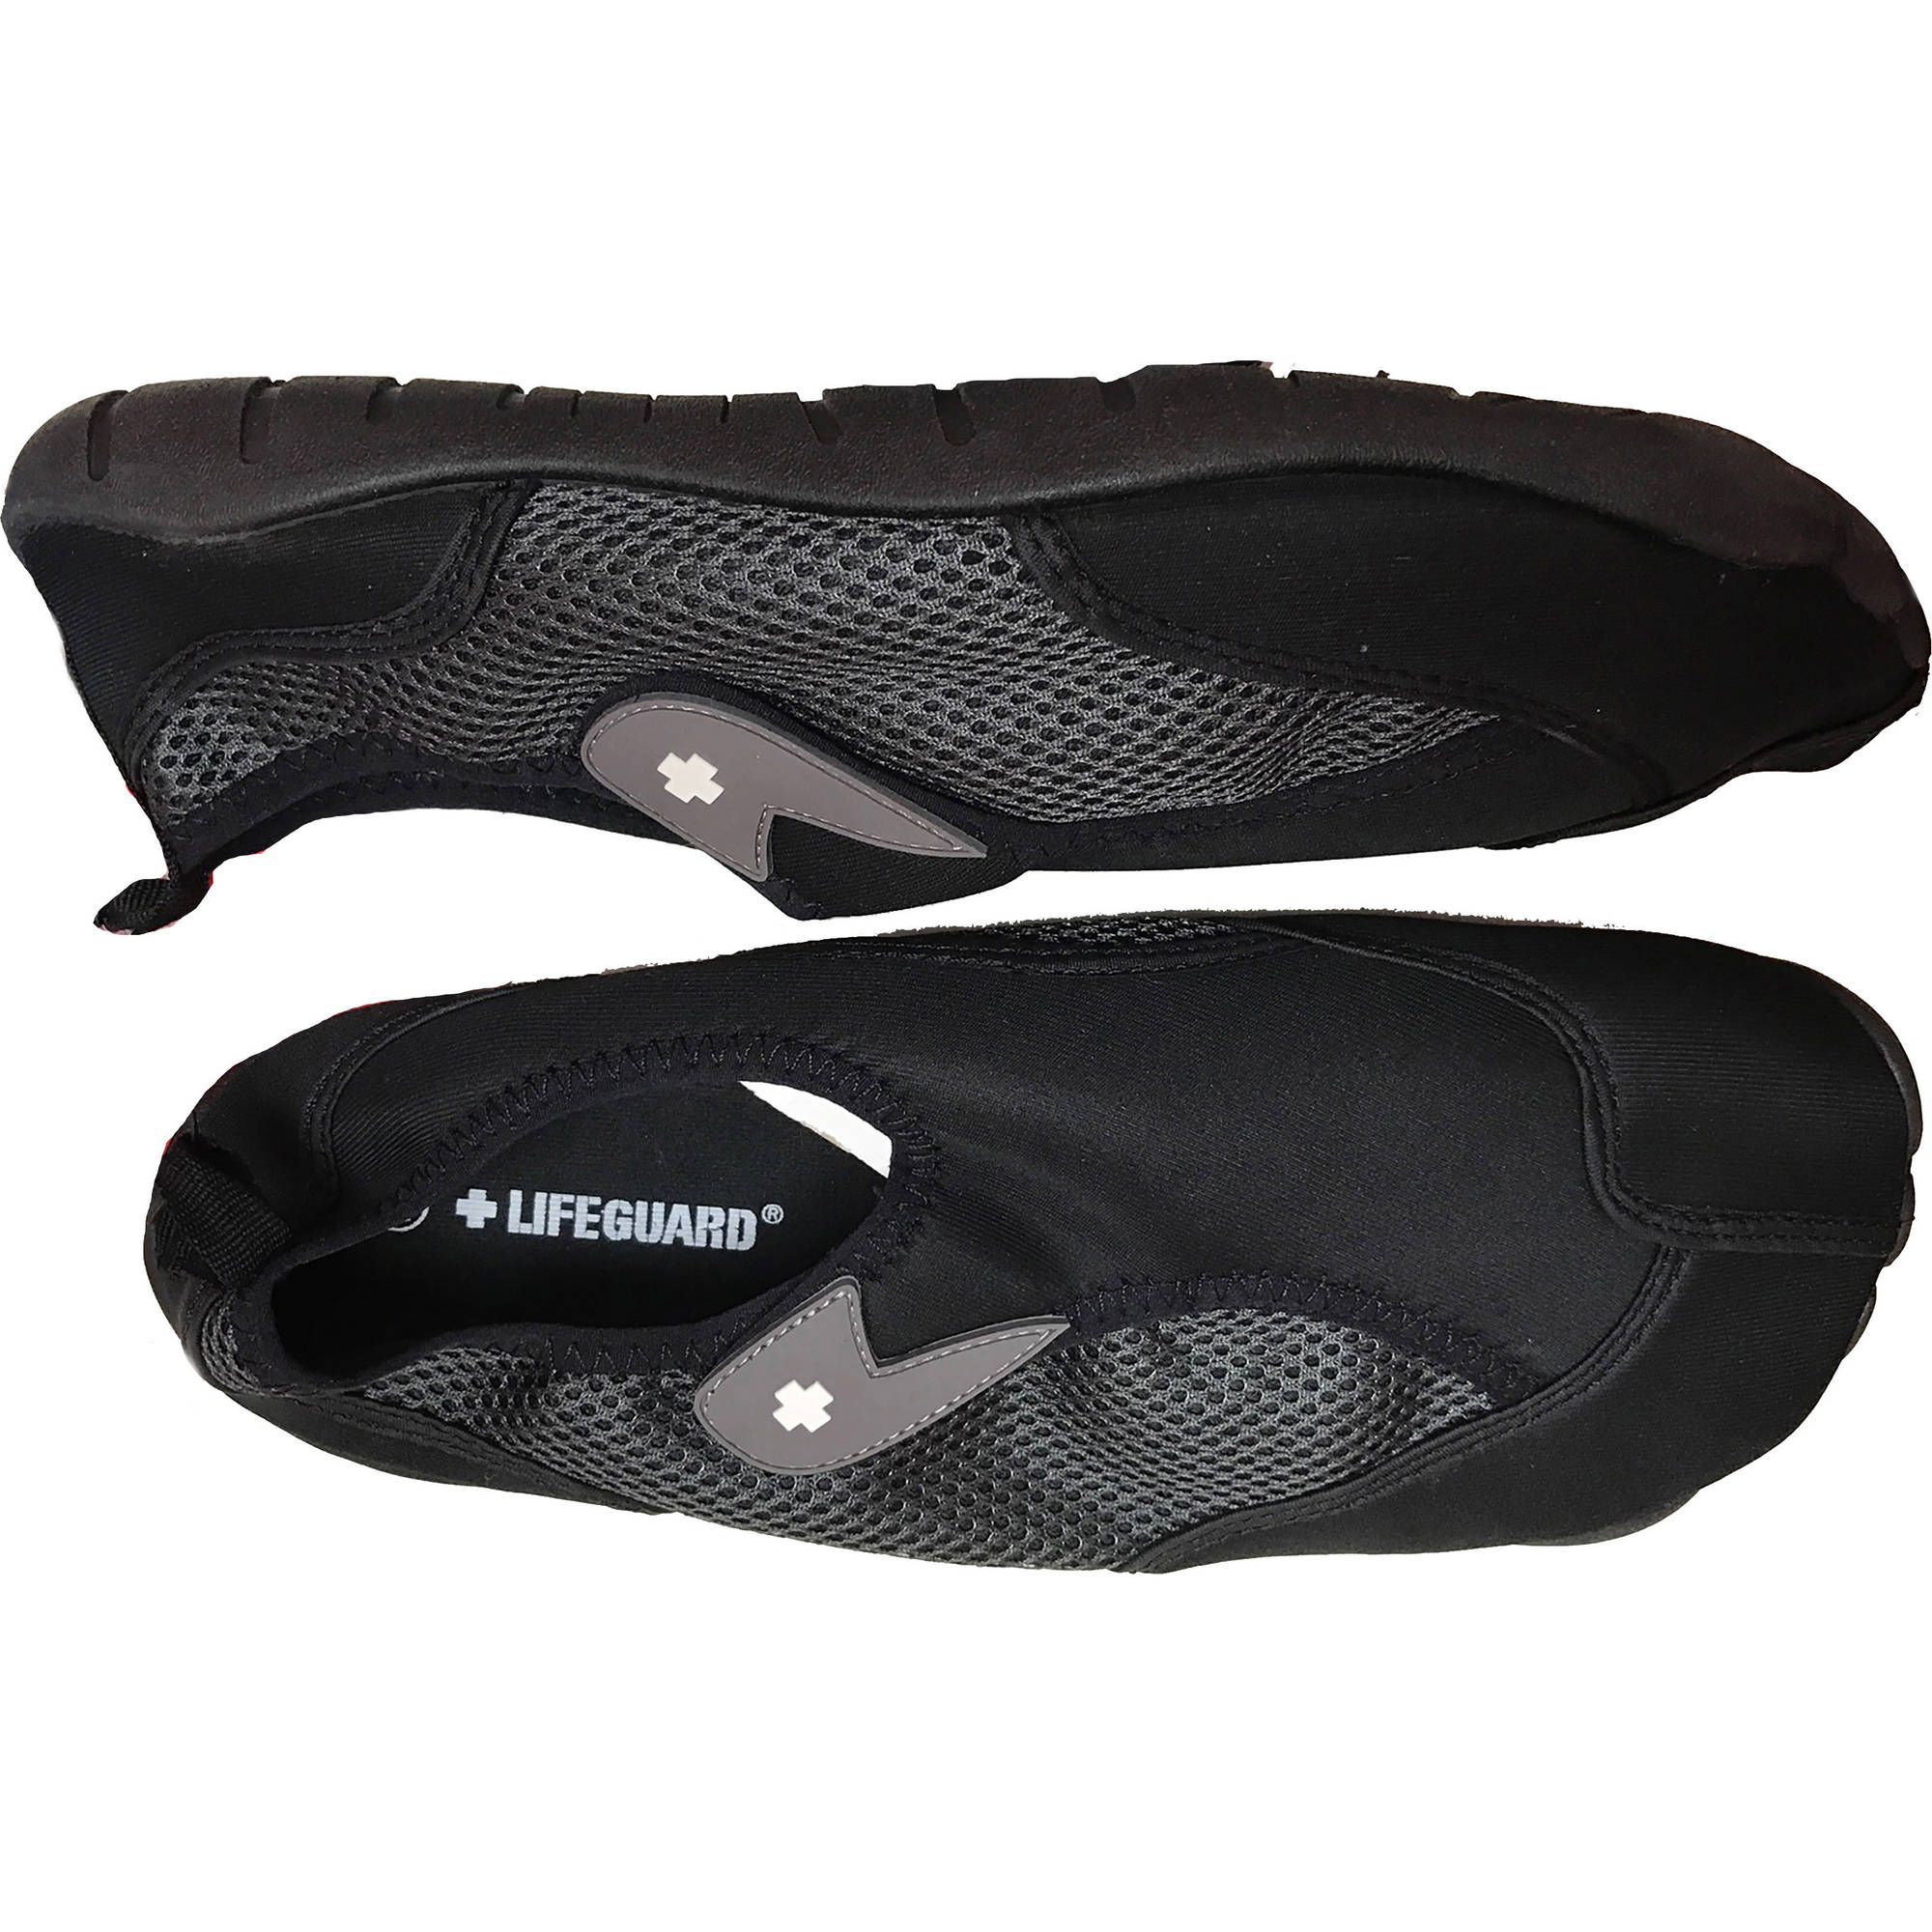 Lifeguard Men's Water Shoe, Black/Gray, 8/9 M - Walmart.com